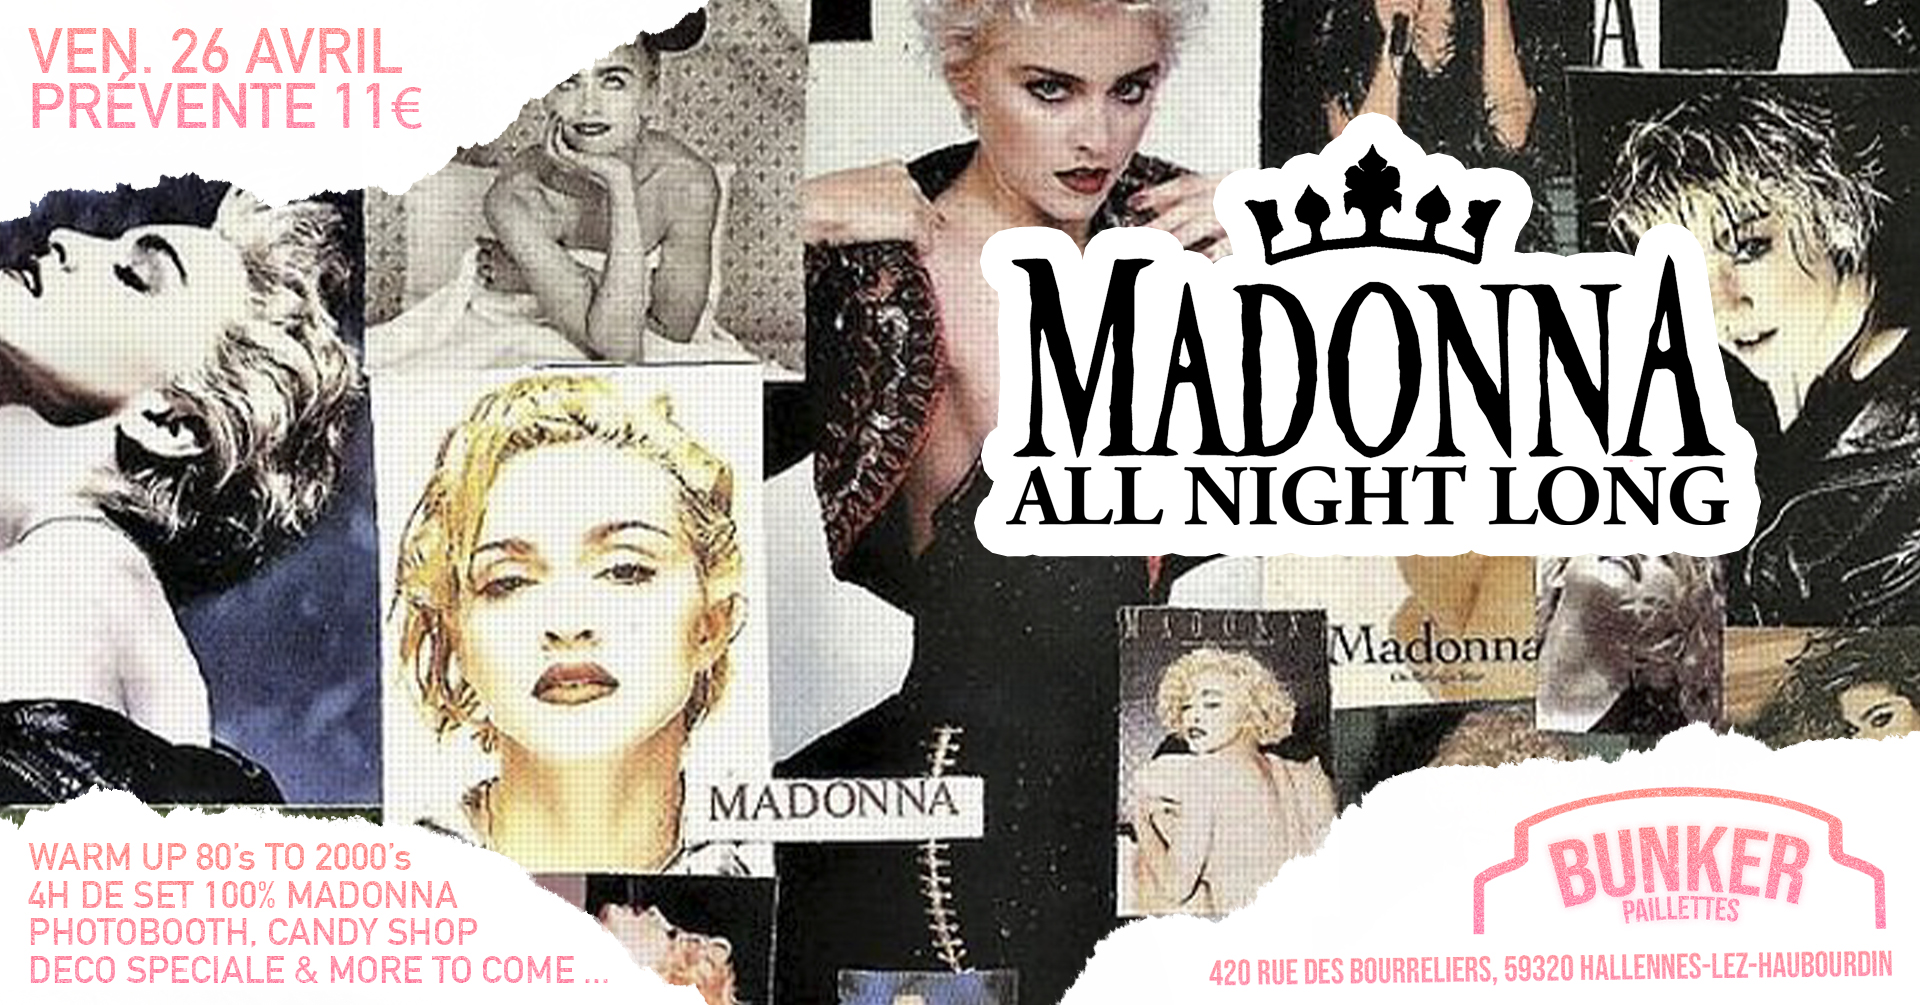 Madonna all night long